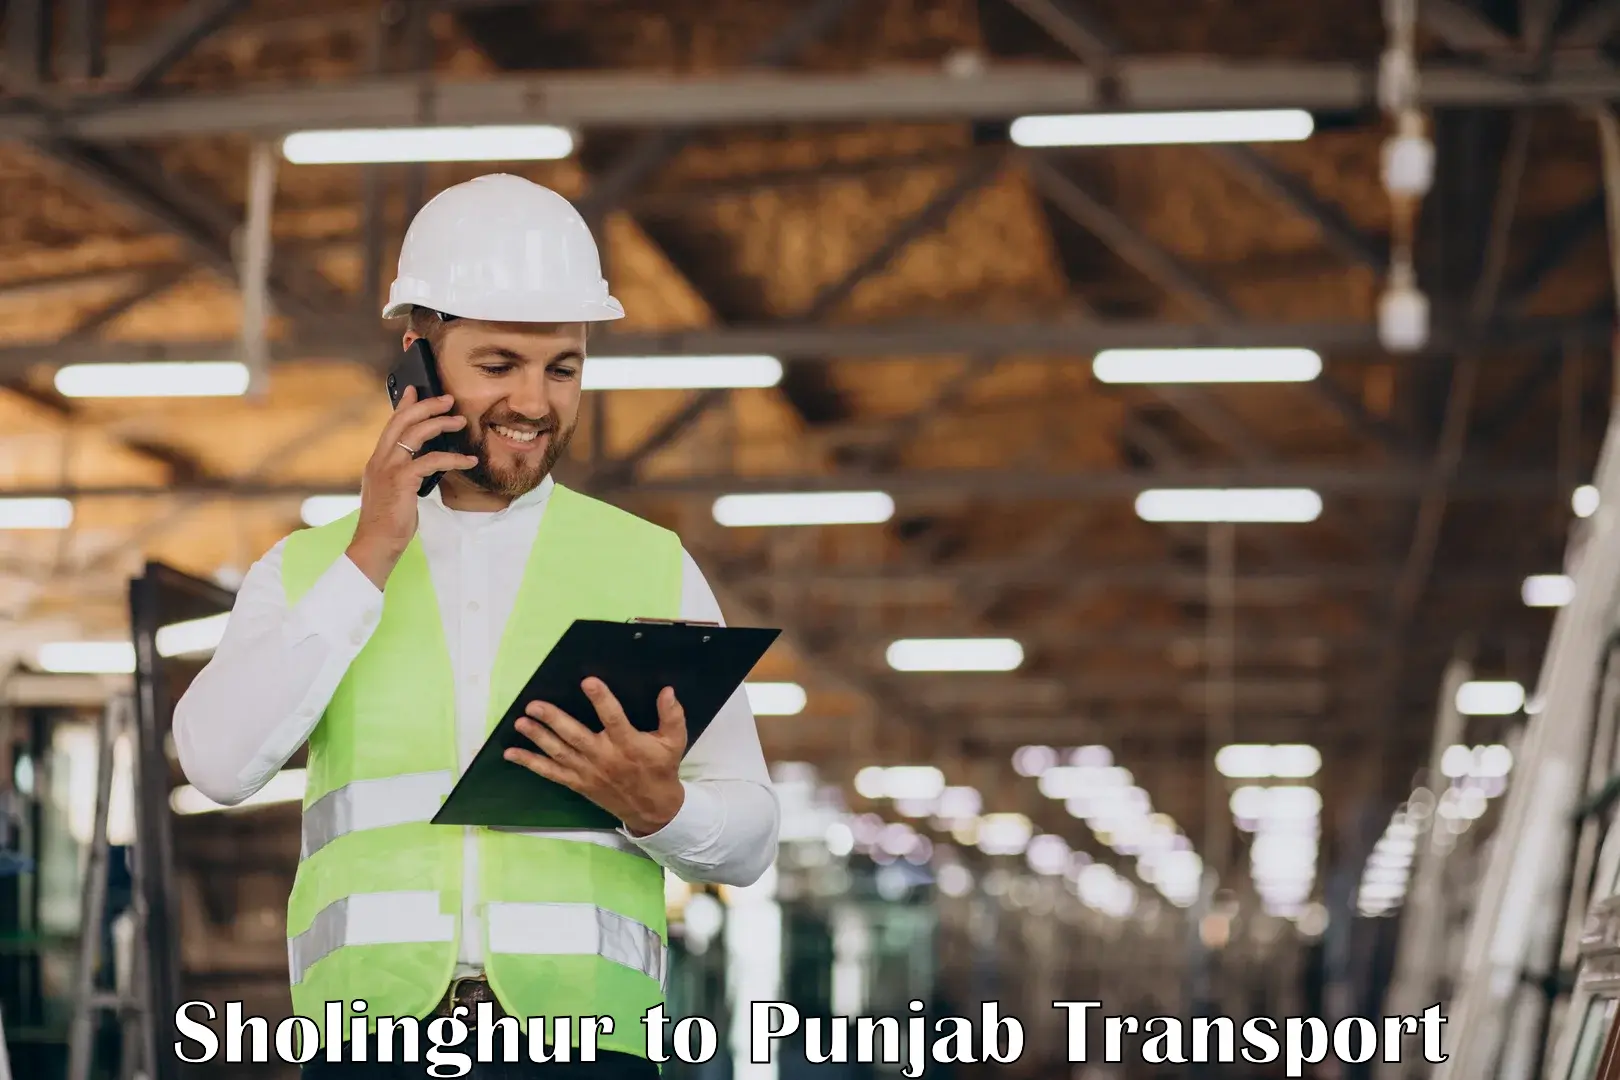 Truck transport companies in India Sholinghur to Dinanagar